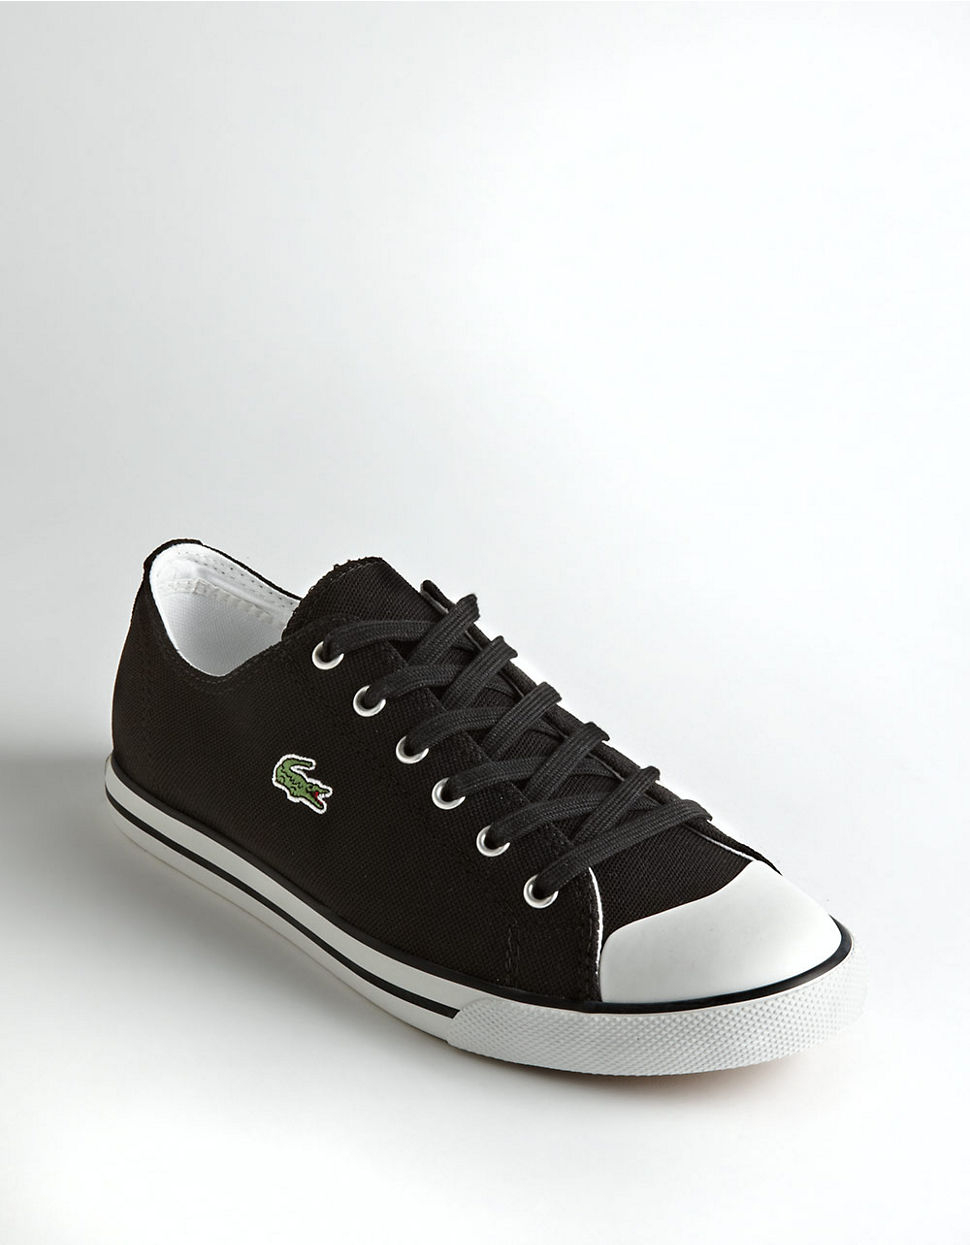 Lacoste L27 Canvas Sneakers in Black for Men Lyst